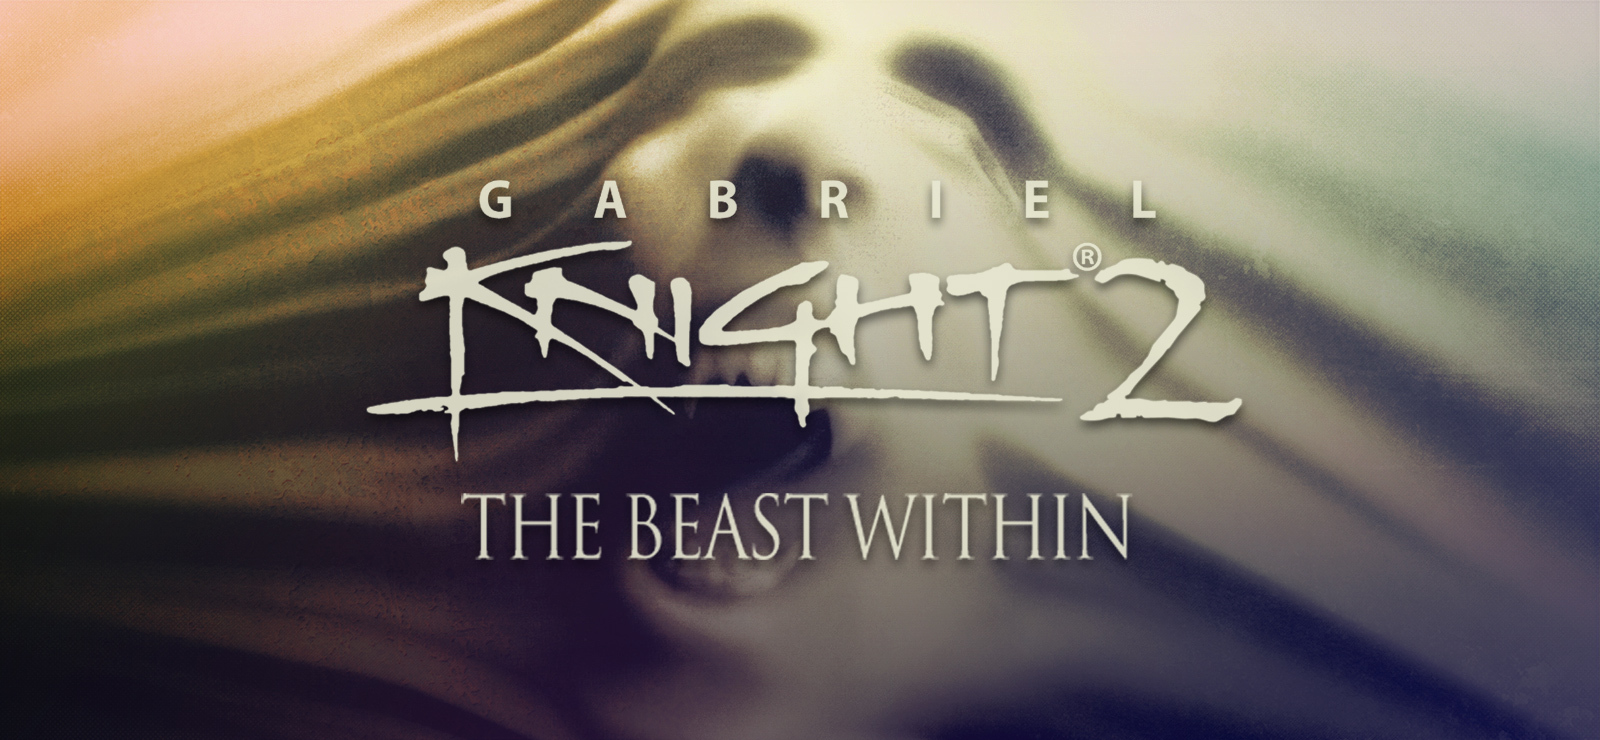 download gabriel knight 2